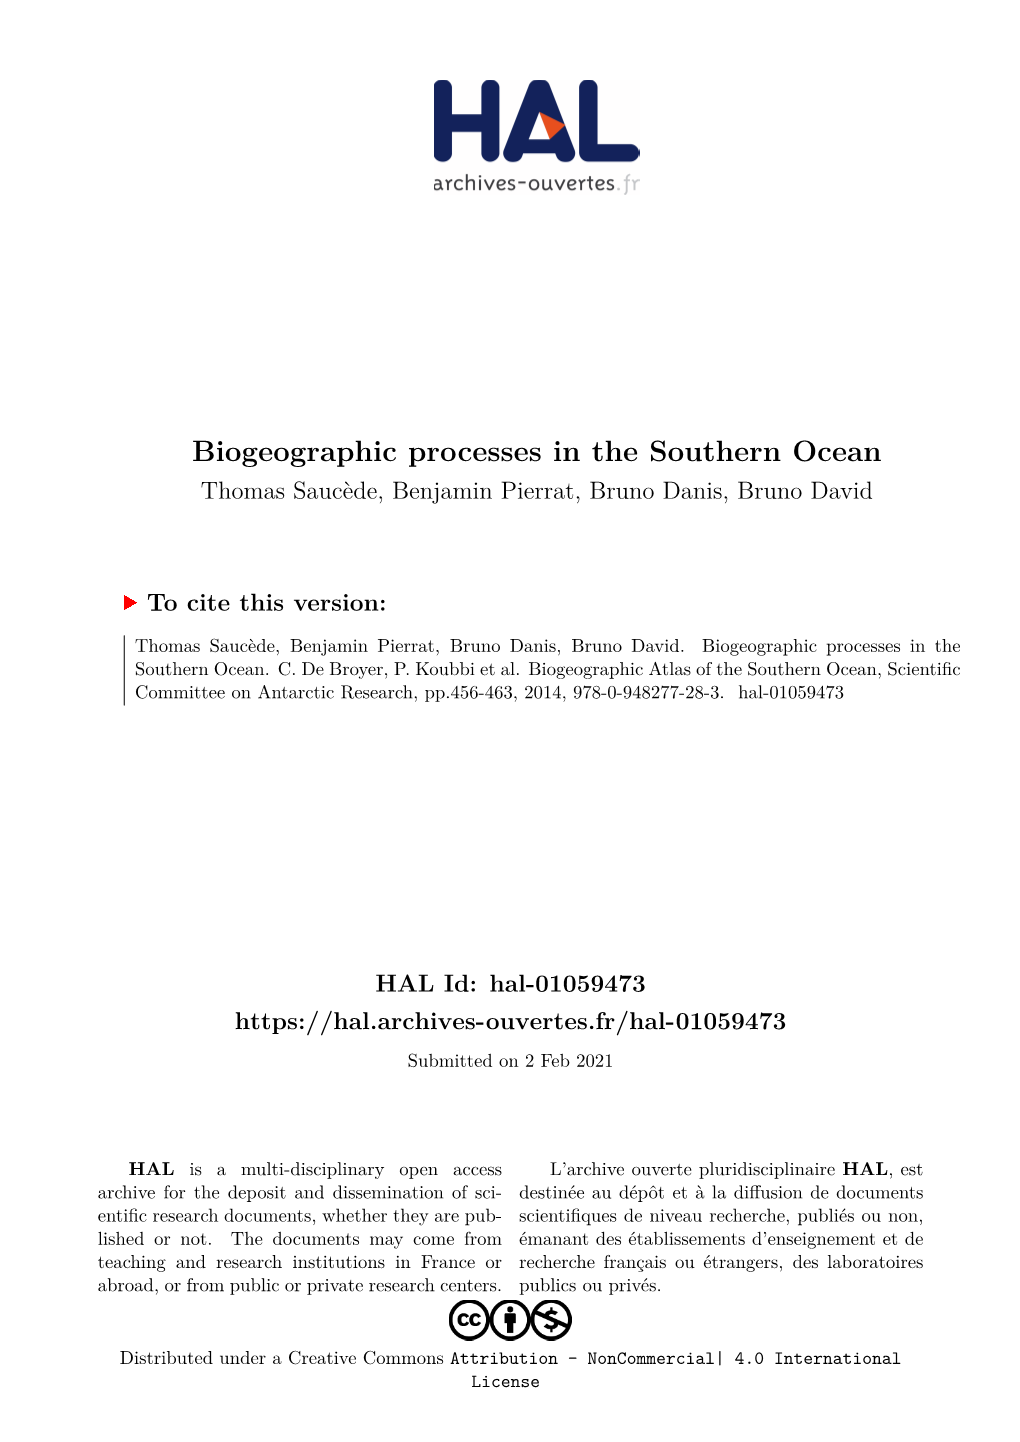 Biogeographic Processes in the Southern Ocean Thomas Saucède, Benjamin Pierrat, Bruno Danis, Bruno David